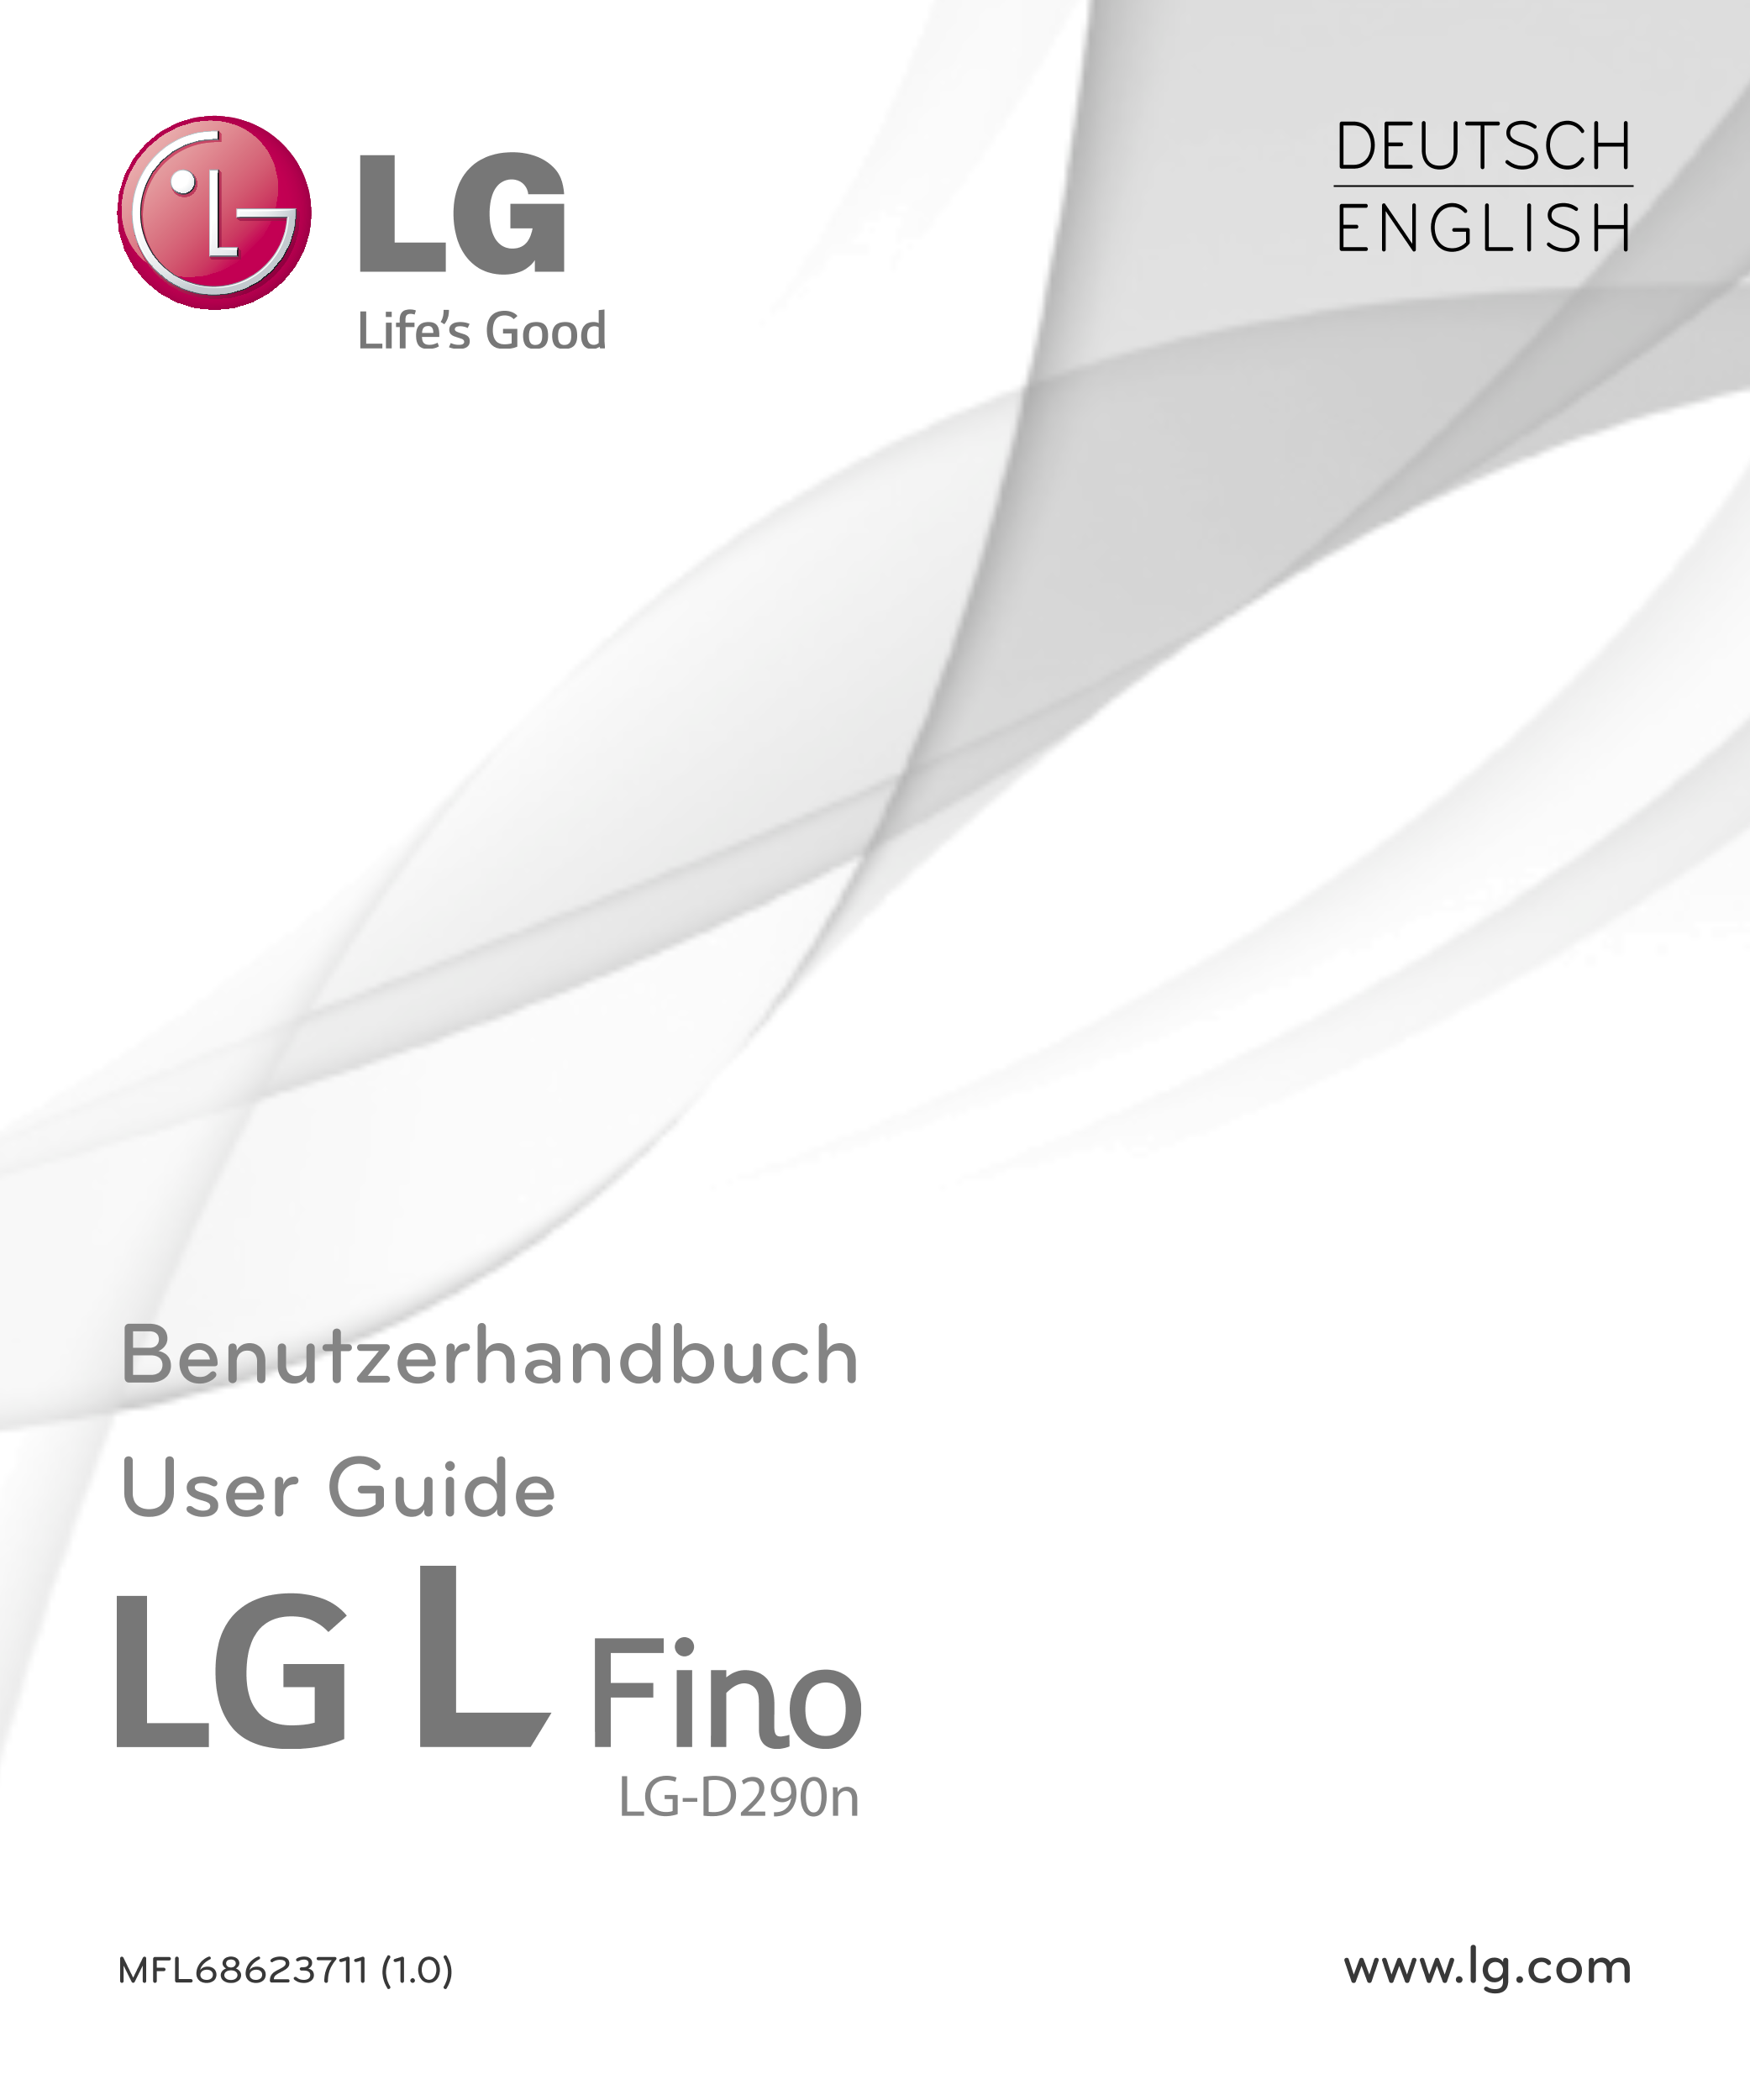 DEUTSCH
ENGLISH
Benutzerhandbuch
User Guide
LG-D290n
MFL68623711 (1.0) www.lg.com